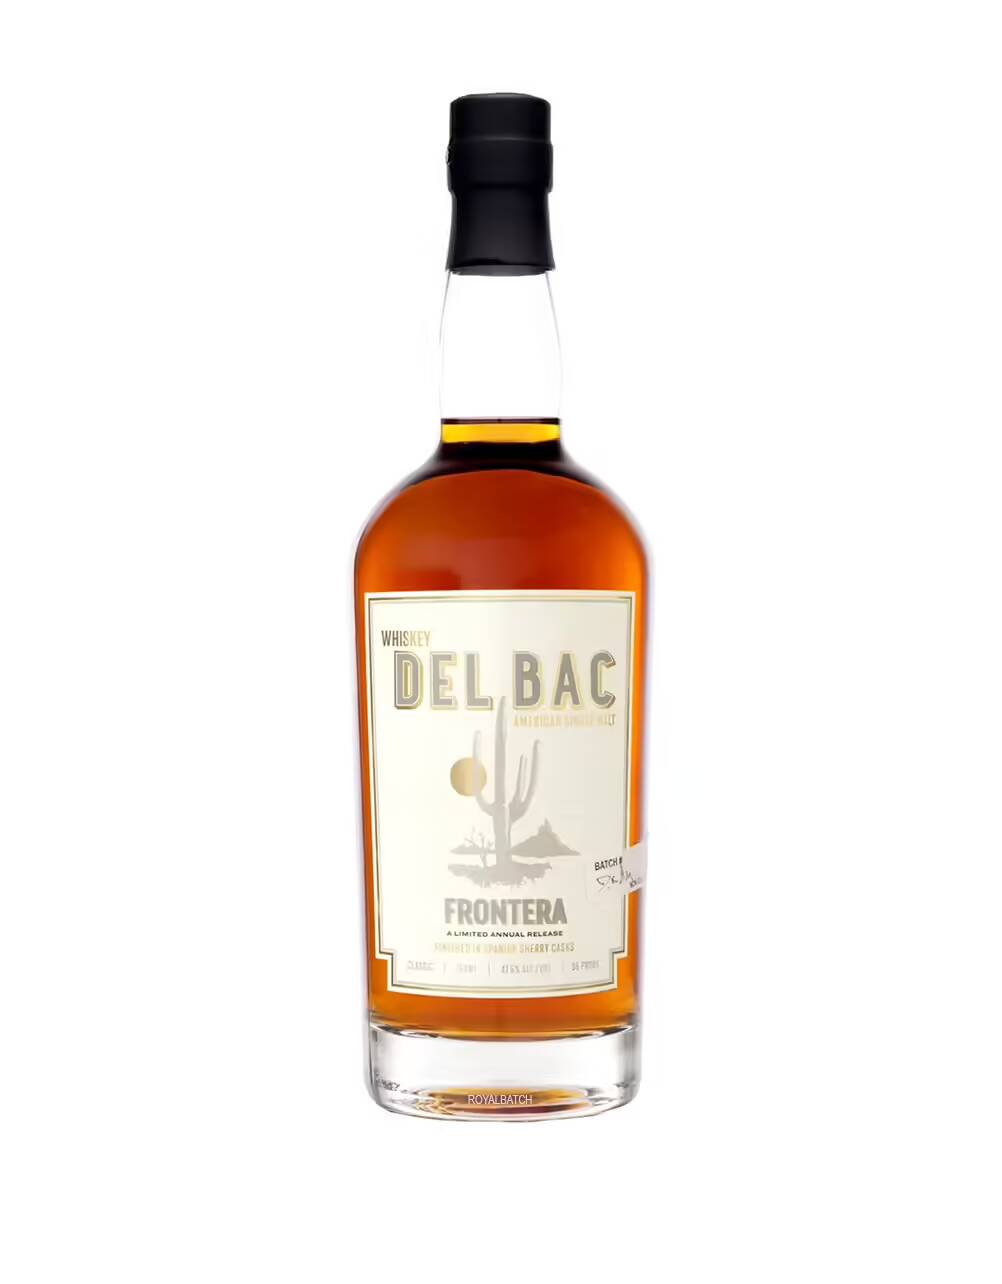 Del Bac Frontera American Single Malt Whiskey